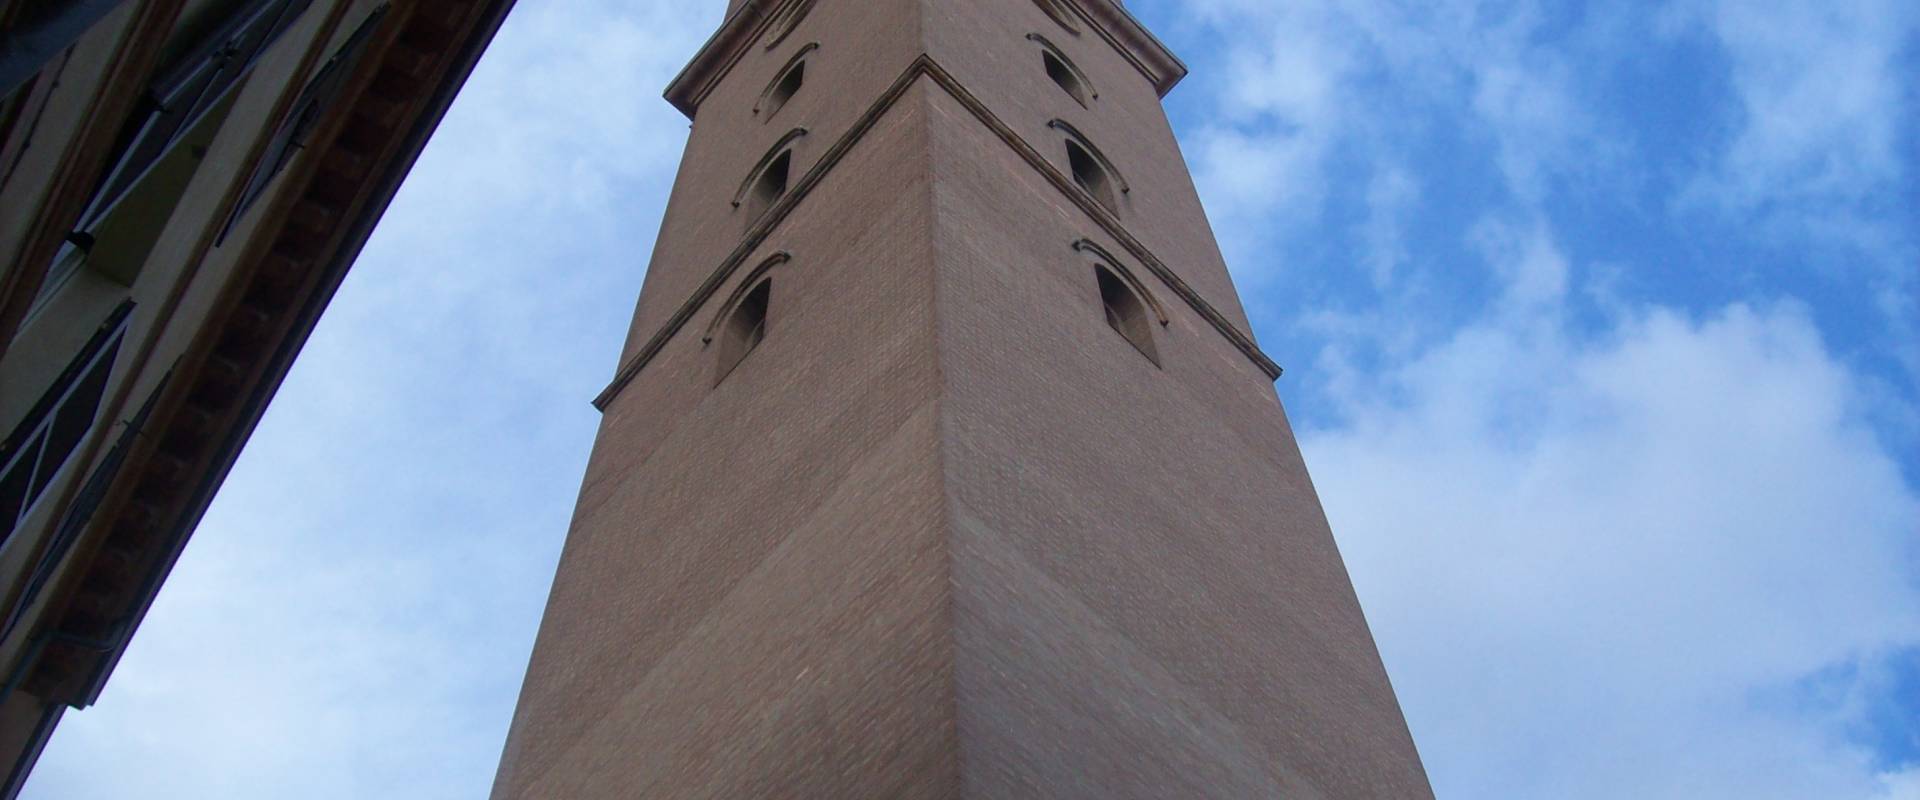 Torre Civica Forlì photo by Diego Baglieri